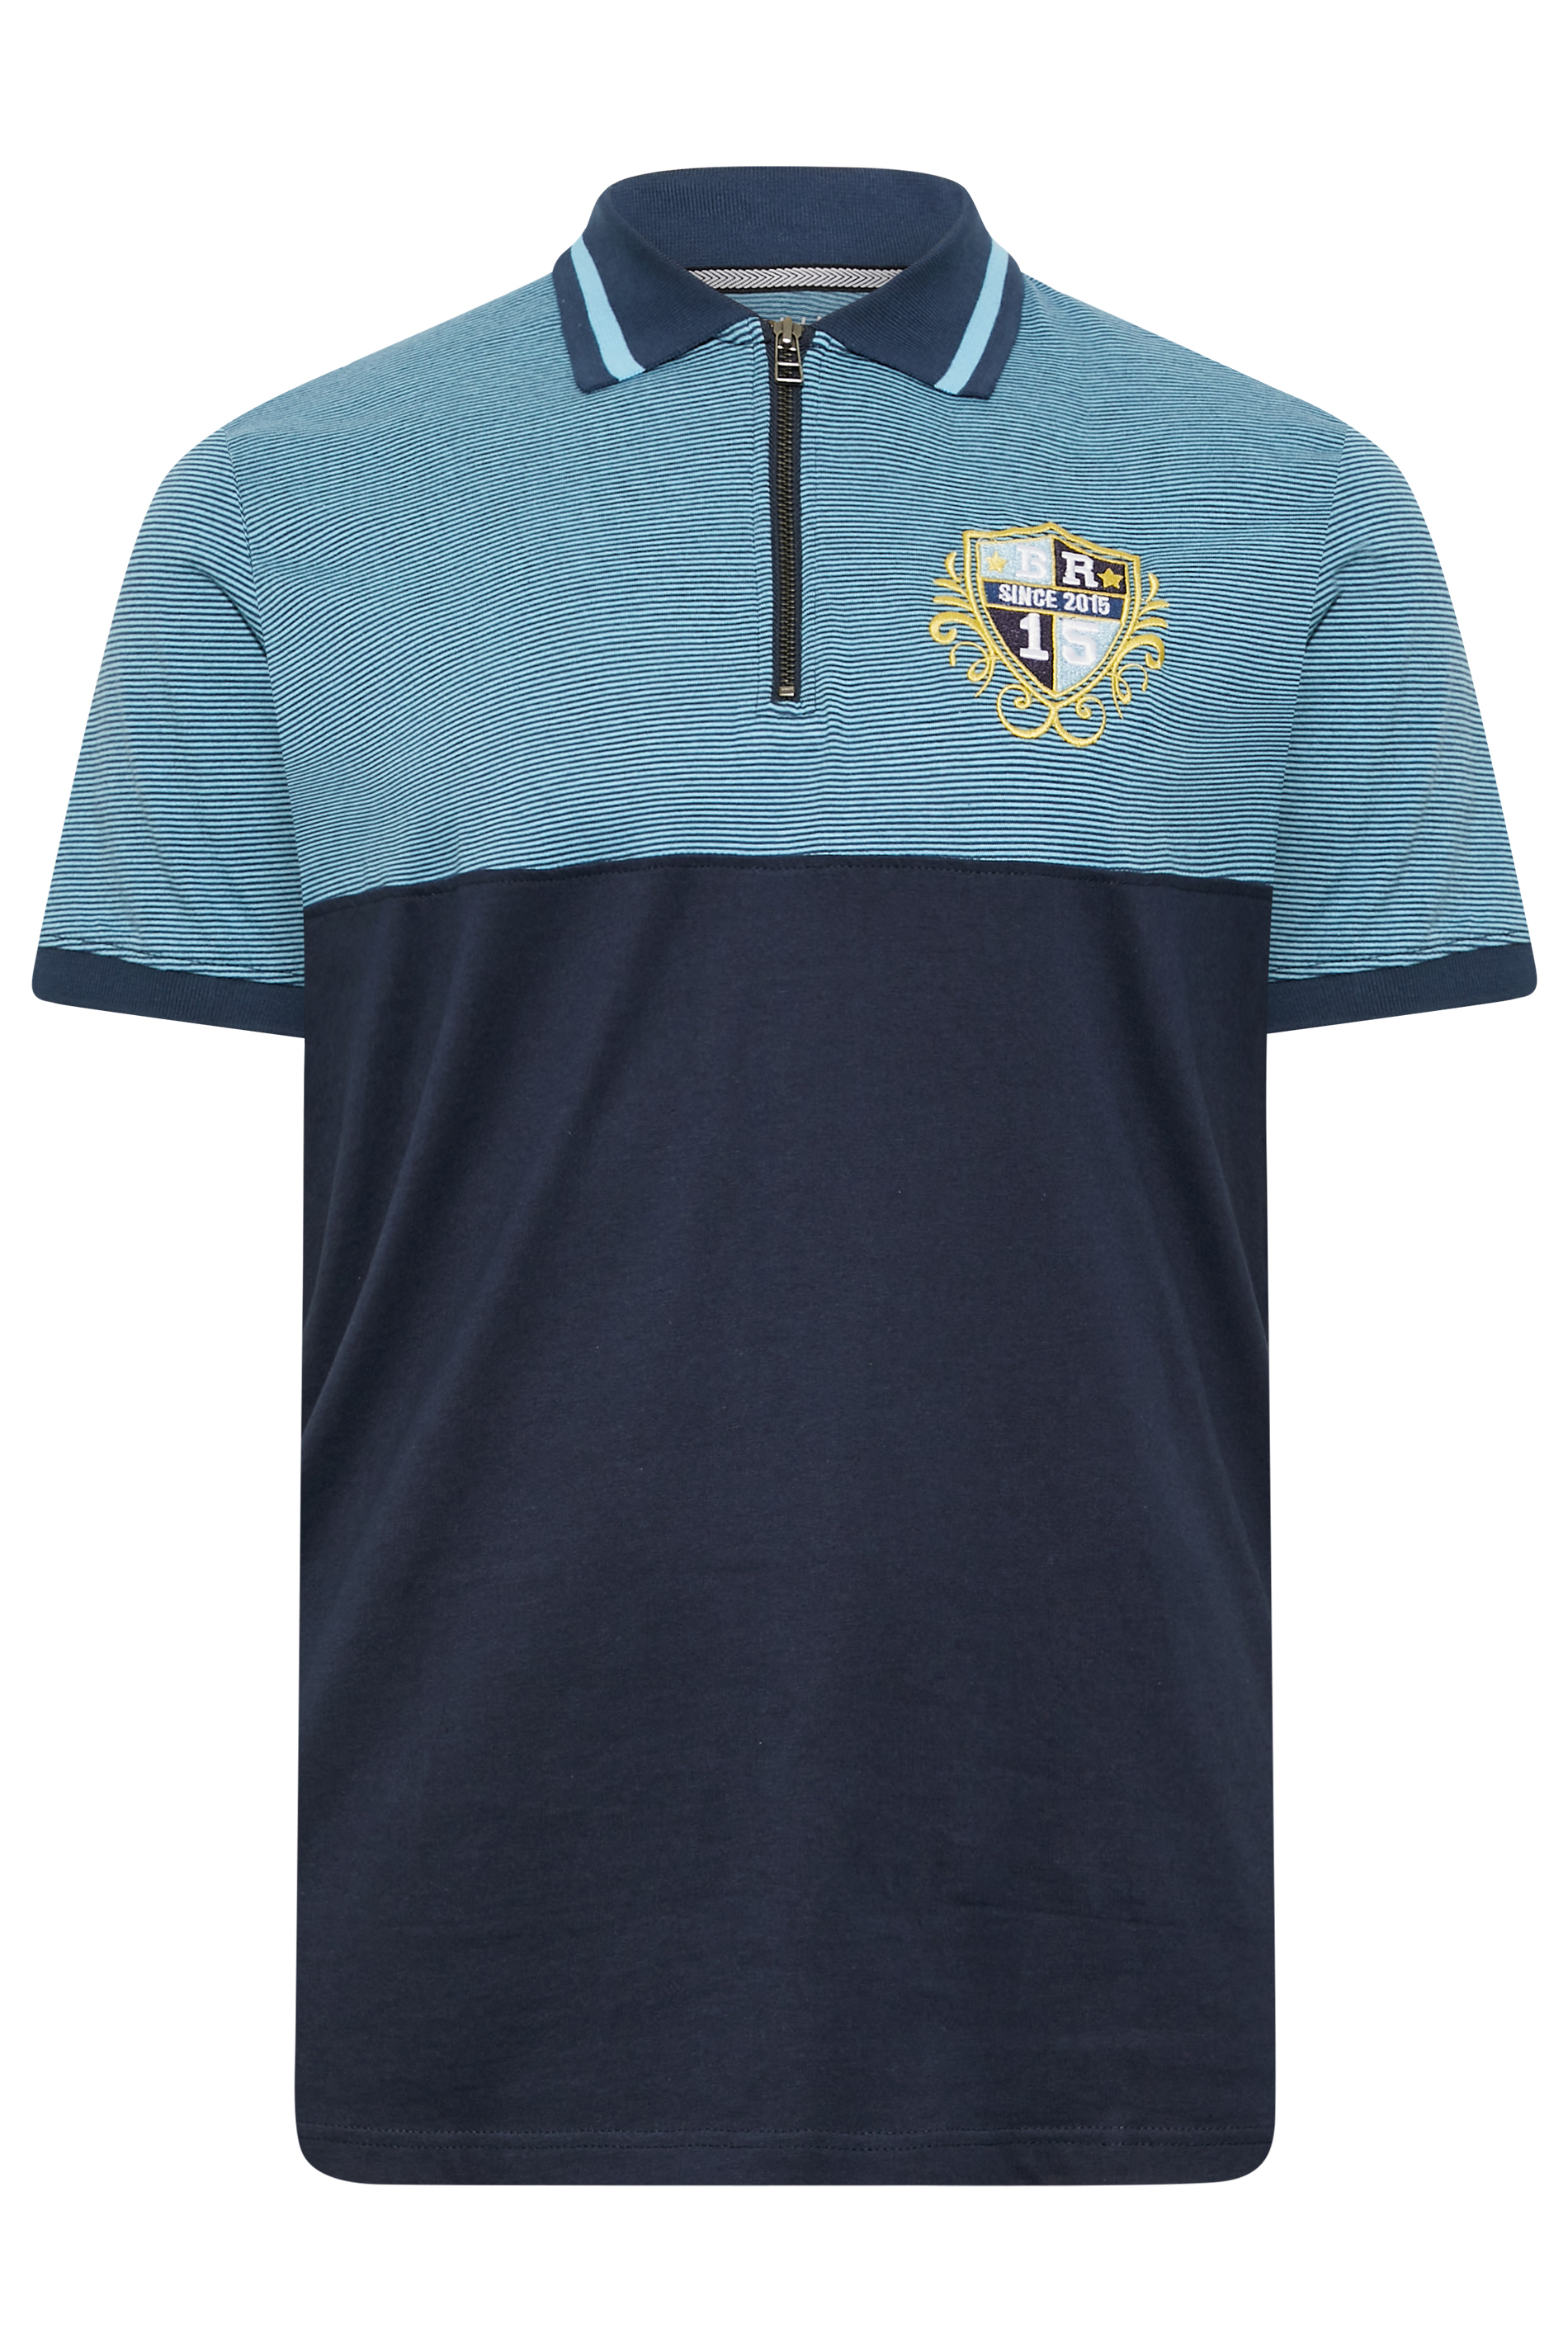 BadRhino Big & Tall Blue Crest Zip Polo Shirt | BadRhino  3